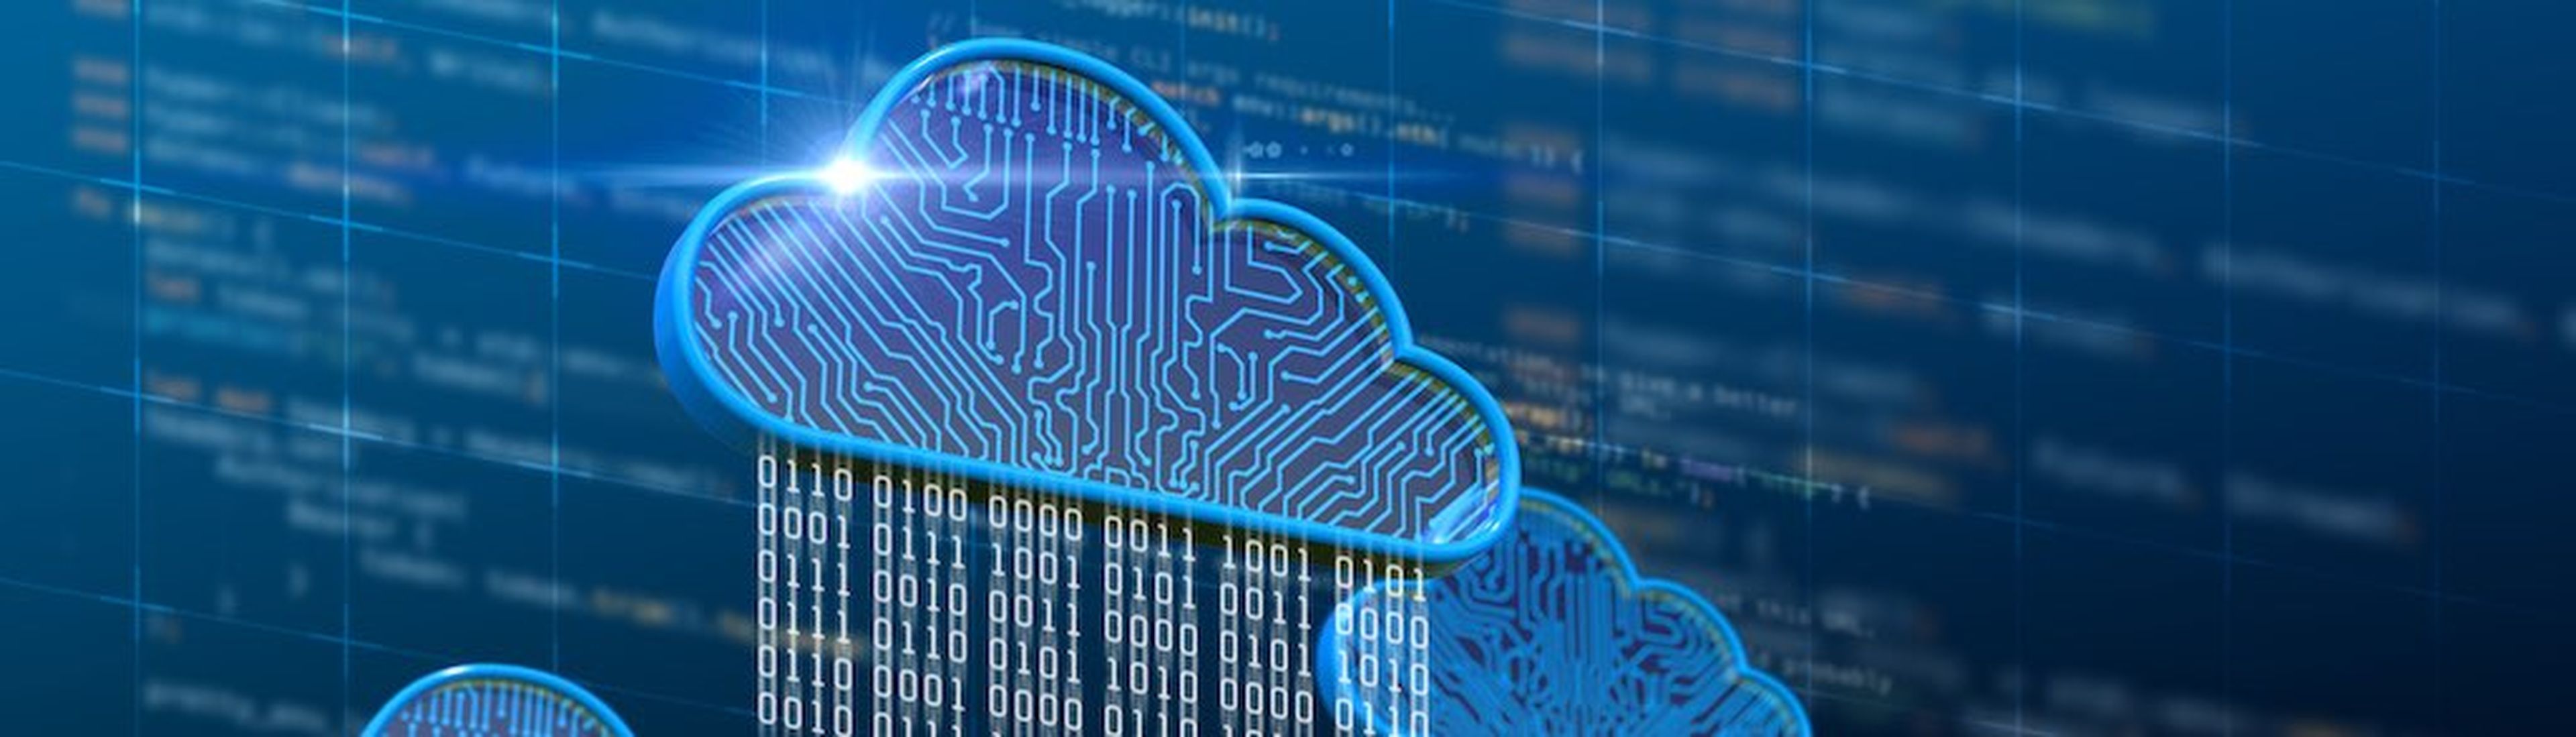 Cloud computing, Cloud Computing, Cloud technology concept